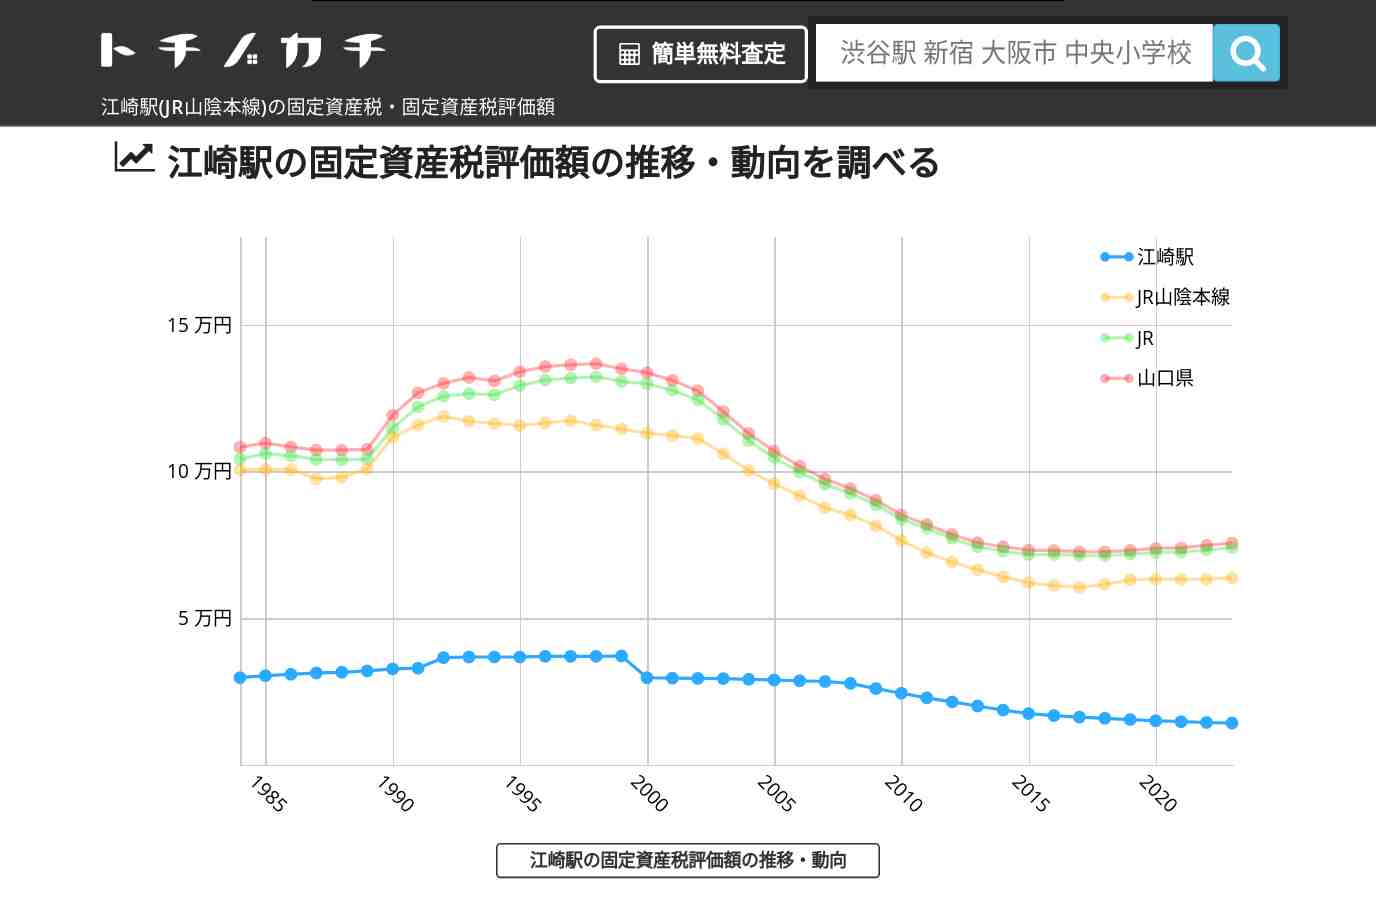 江崎駅(JR山陰本線)の固定資産税・固定資産税評価額 | トチノカチ